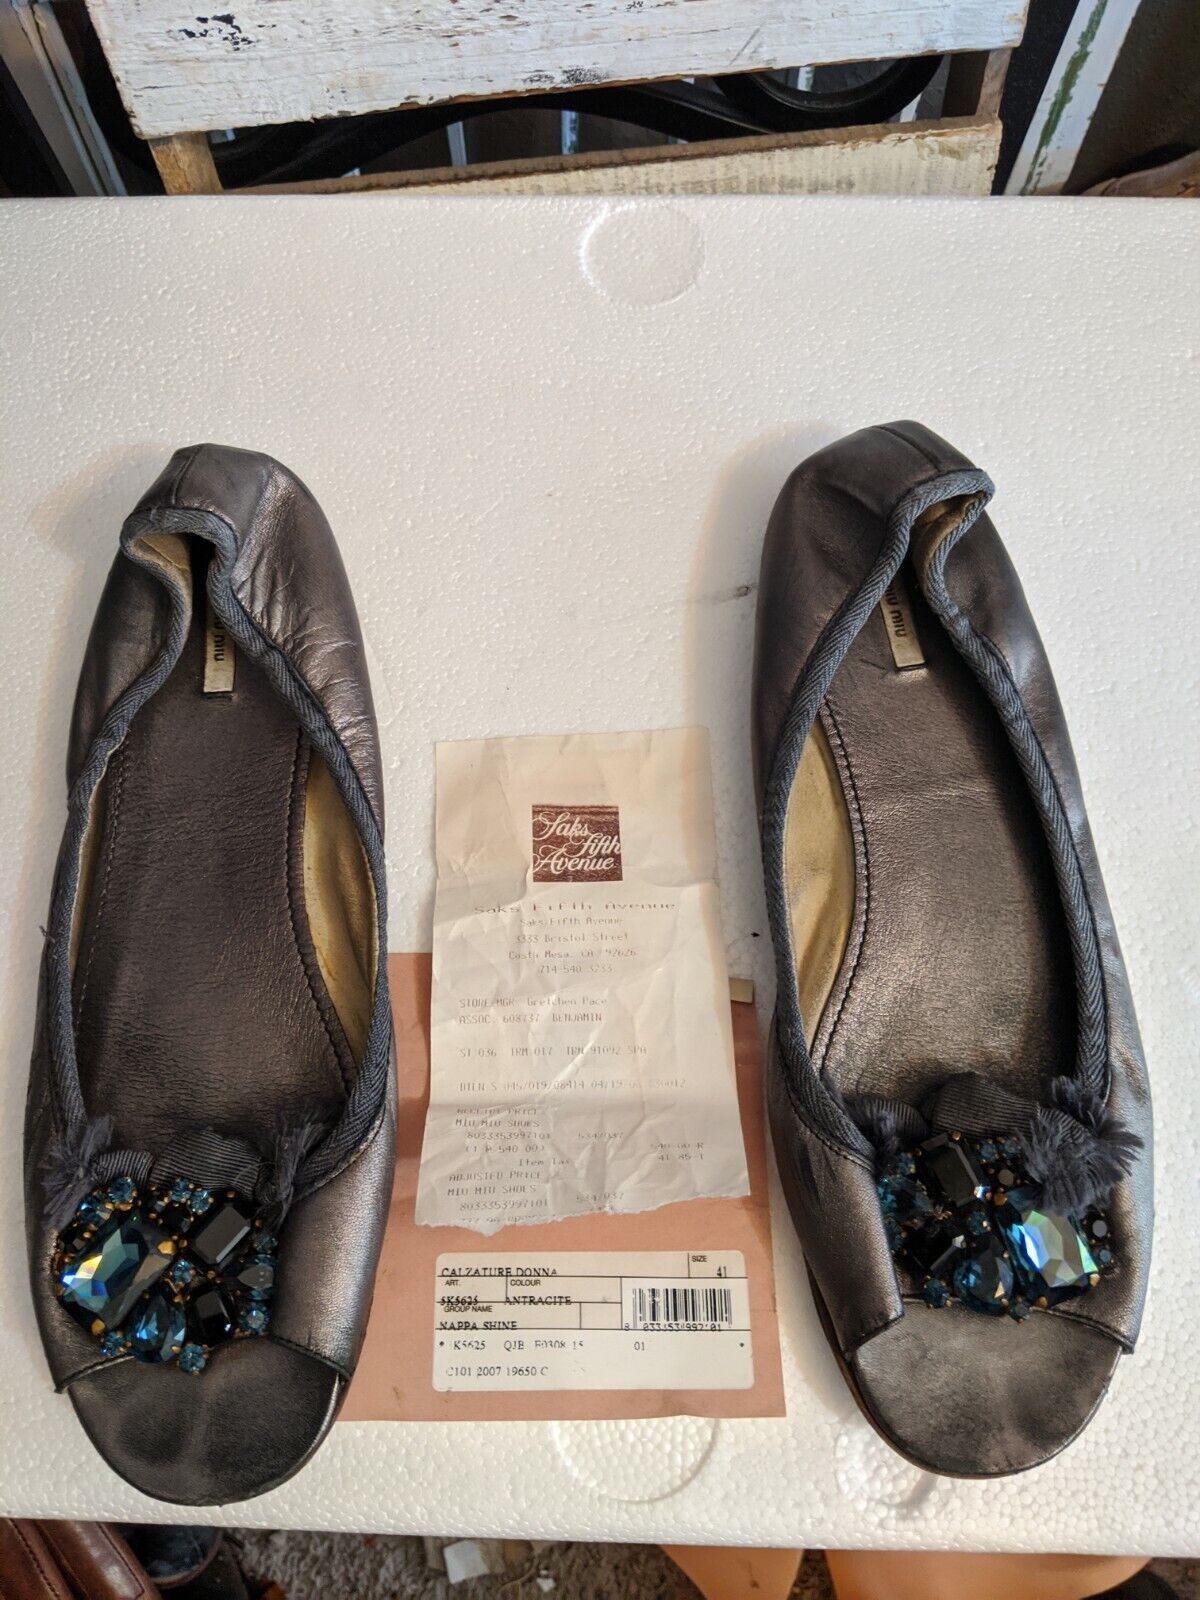 MIU MIU Prada shoe size 41/10 gray peep toe rhinestone jeweled flats $530